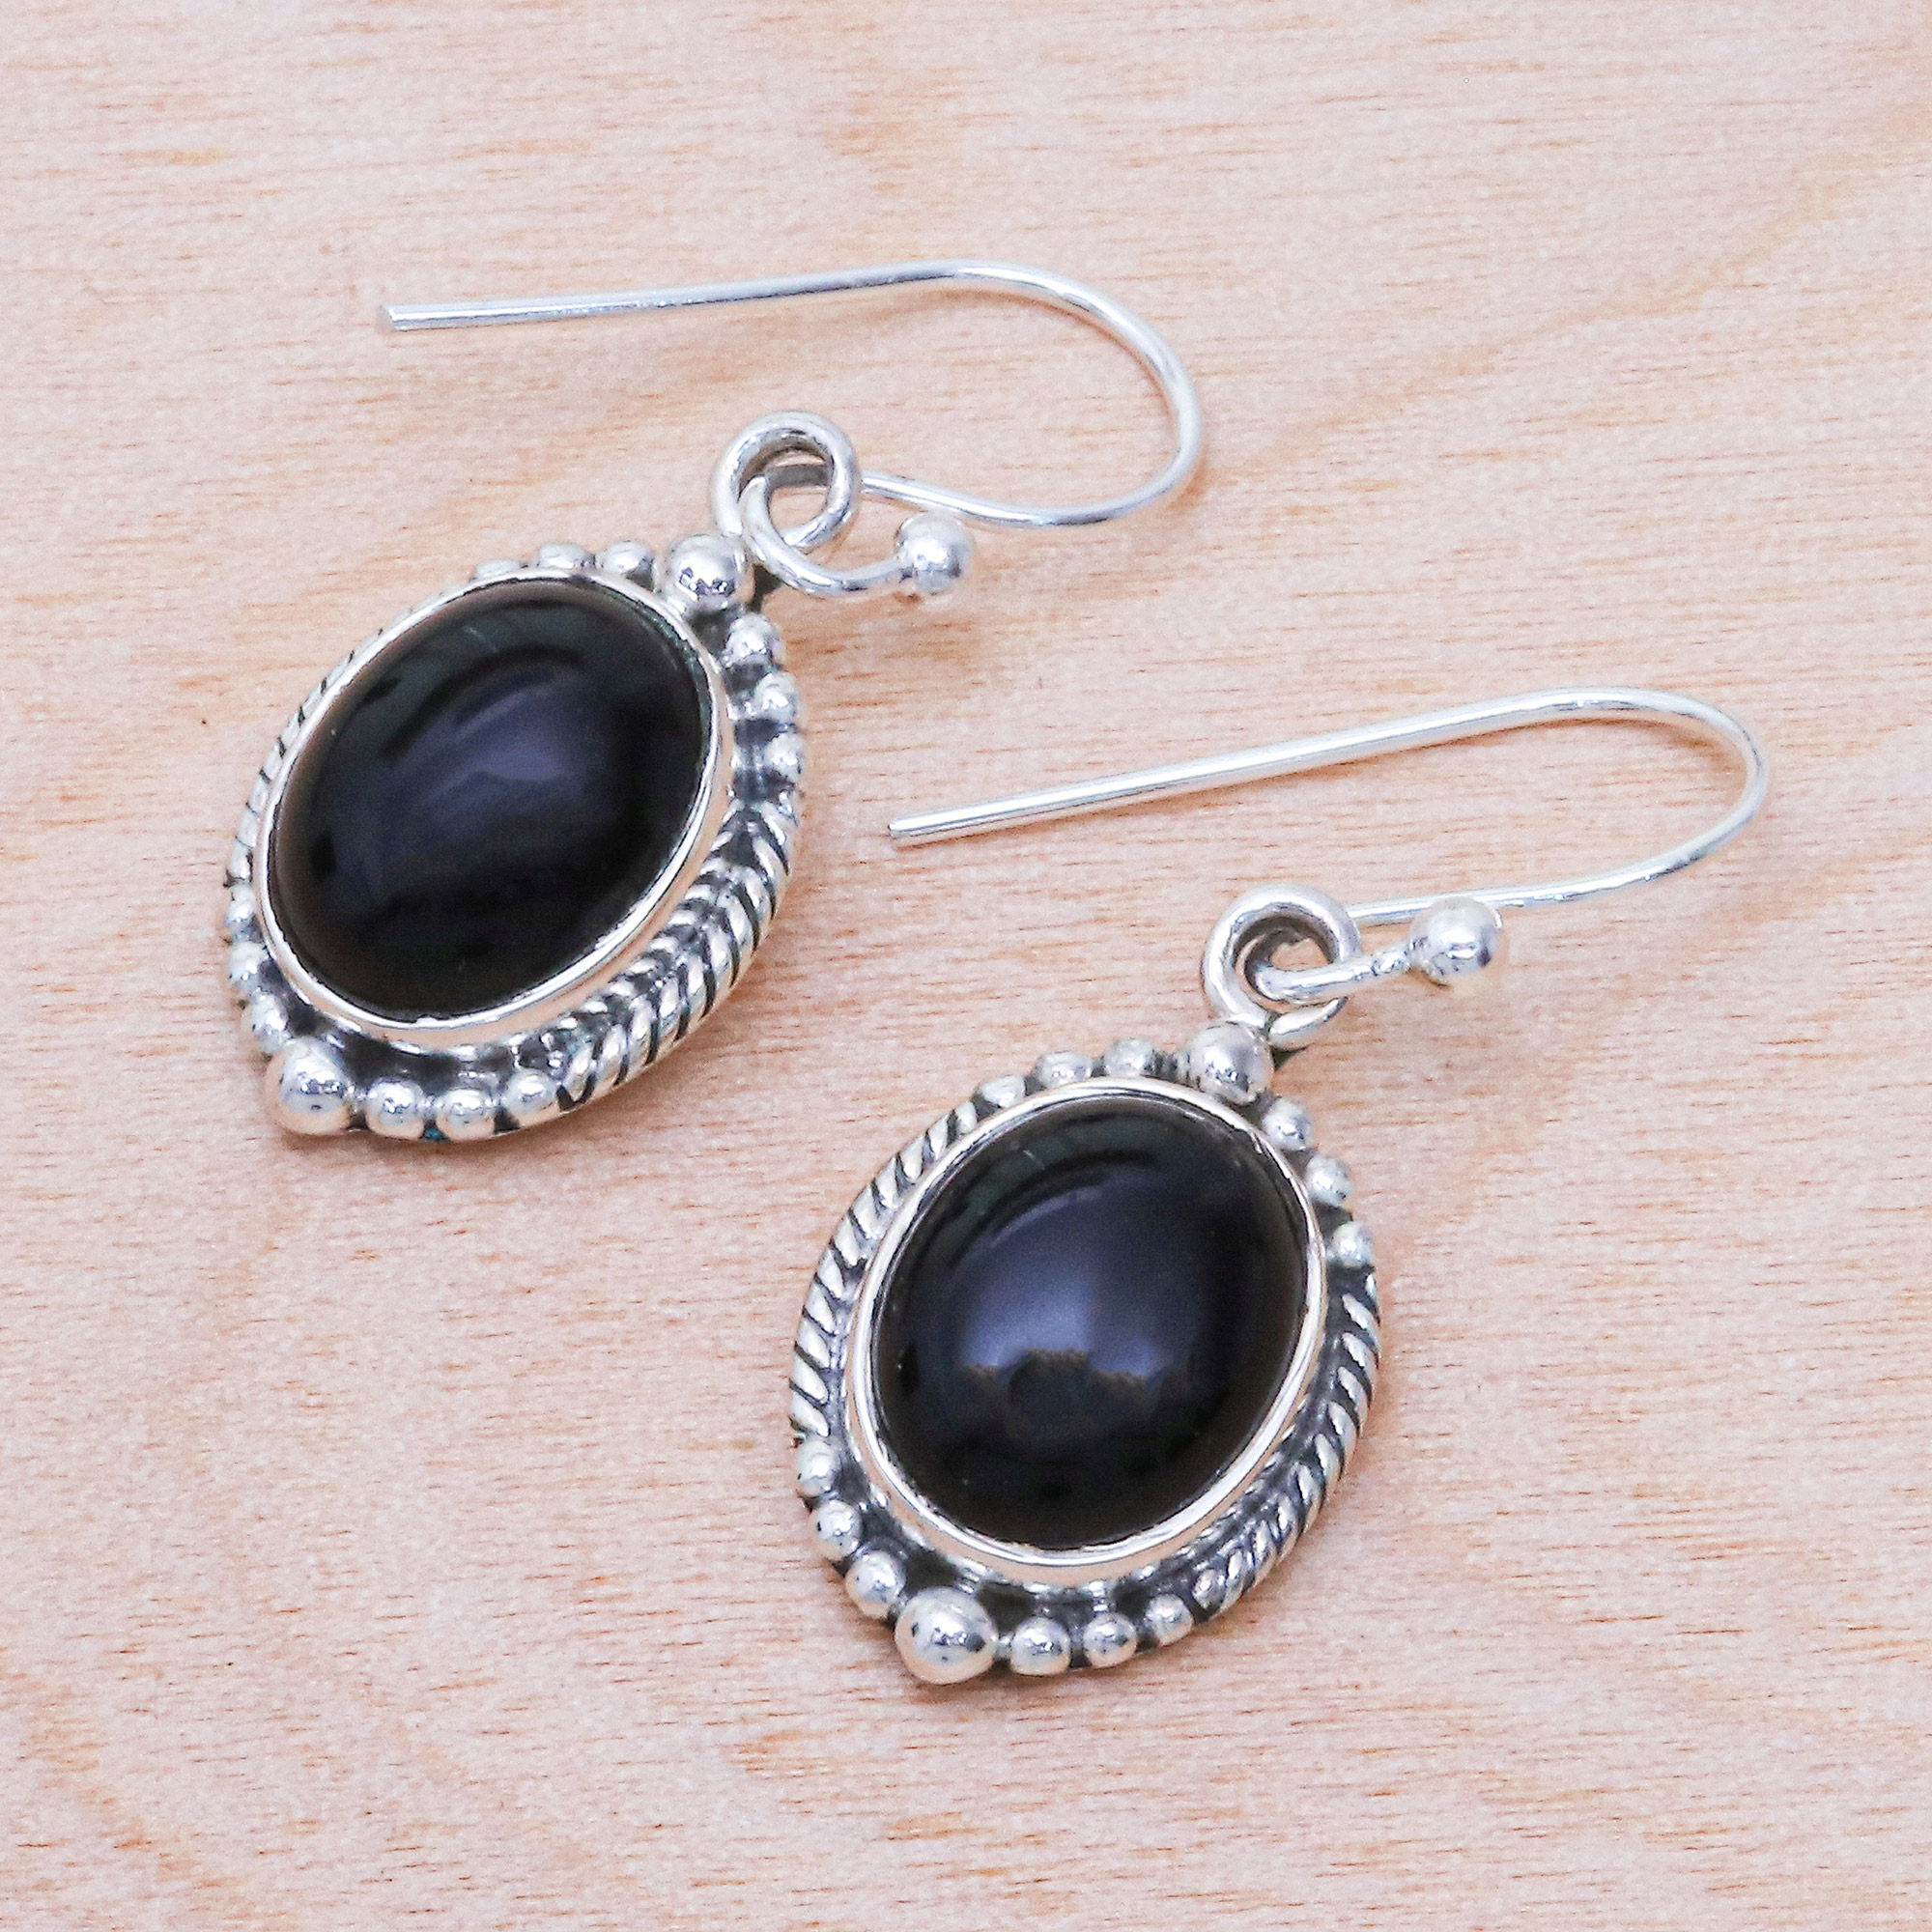 Black Onyx Cabochon Sterling Silver Dangle Earrings - Cool Moon | NOVICA